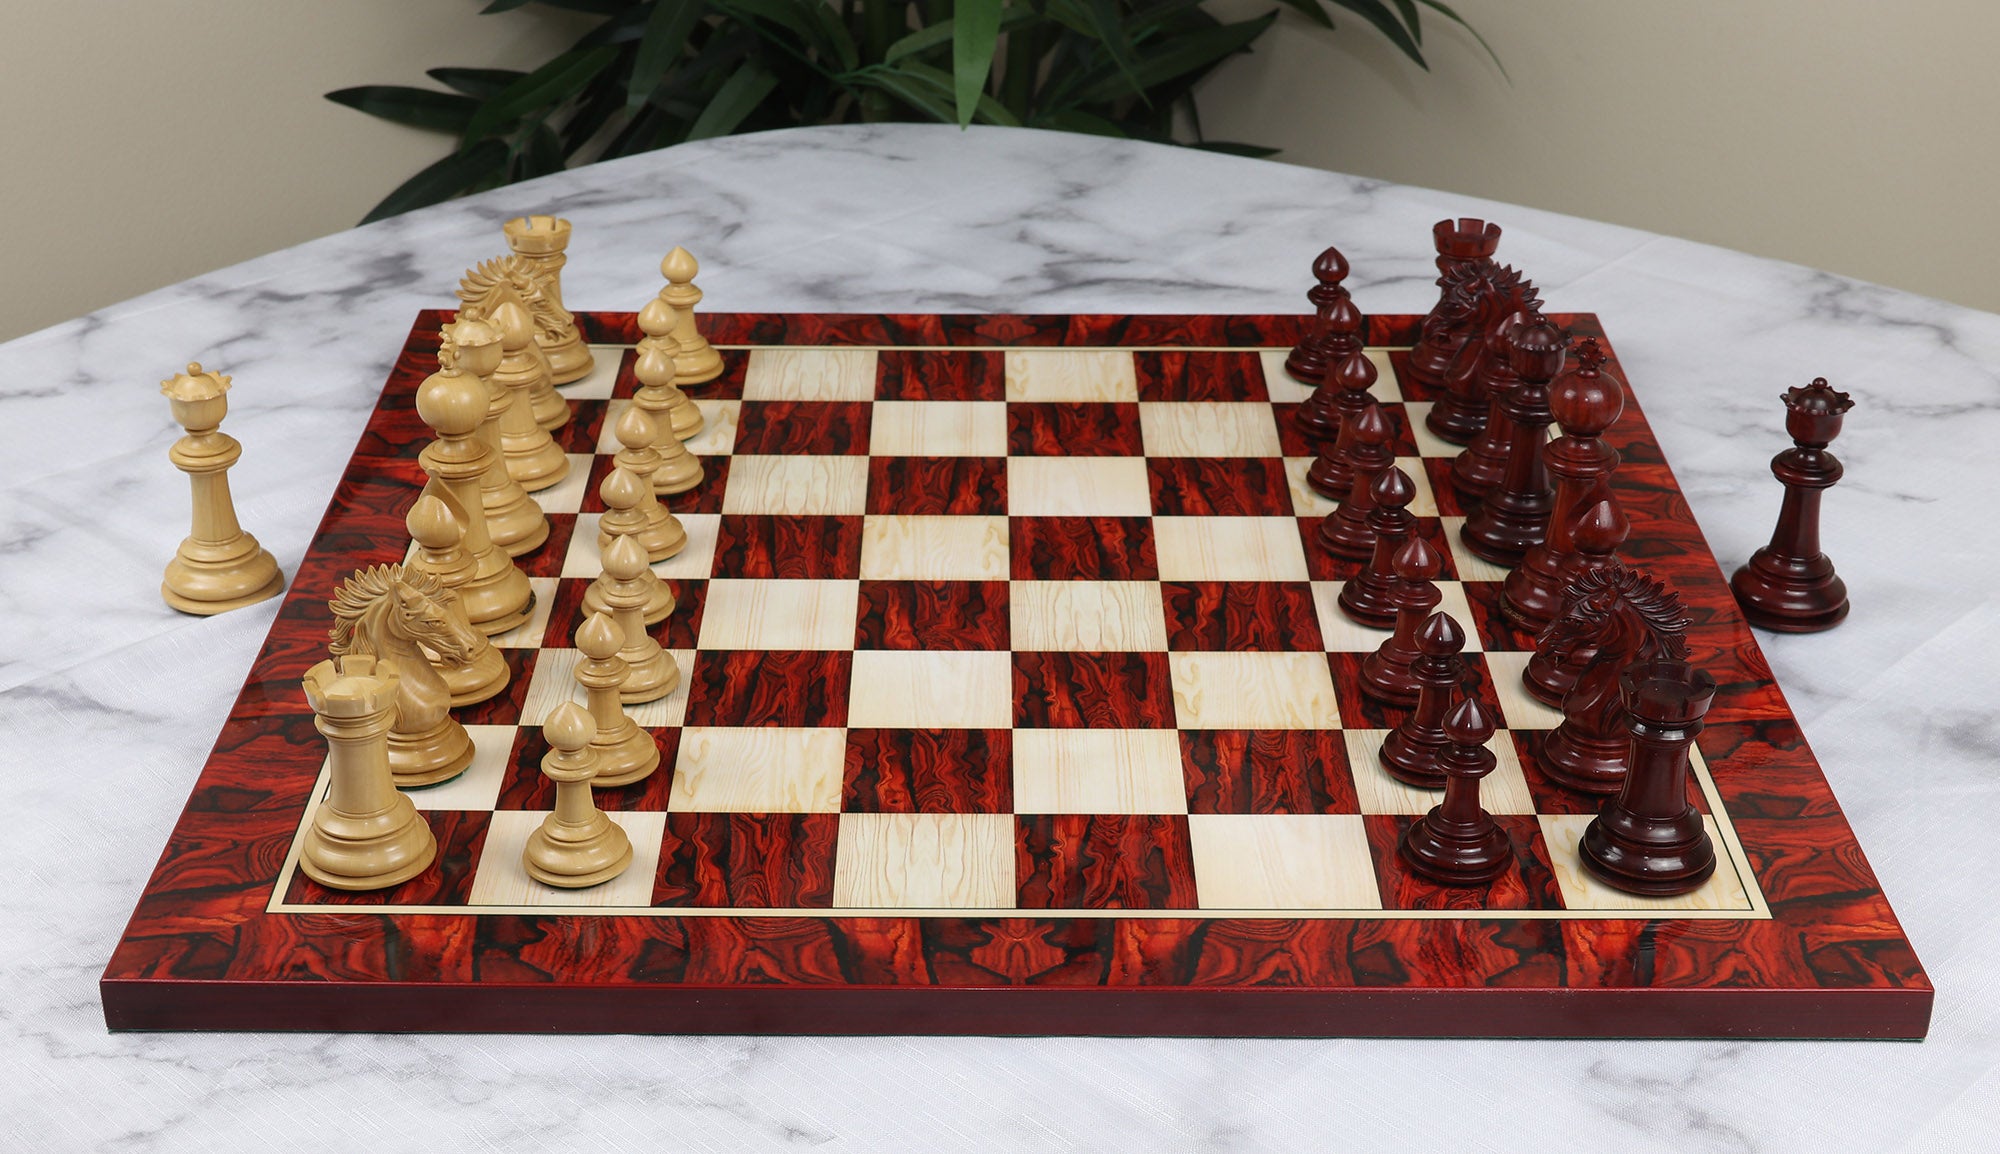 The Arthurian Series 4.4" Luxury Artisan Staunton Padouk Wood Chess Pieces